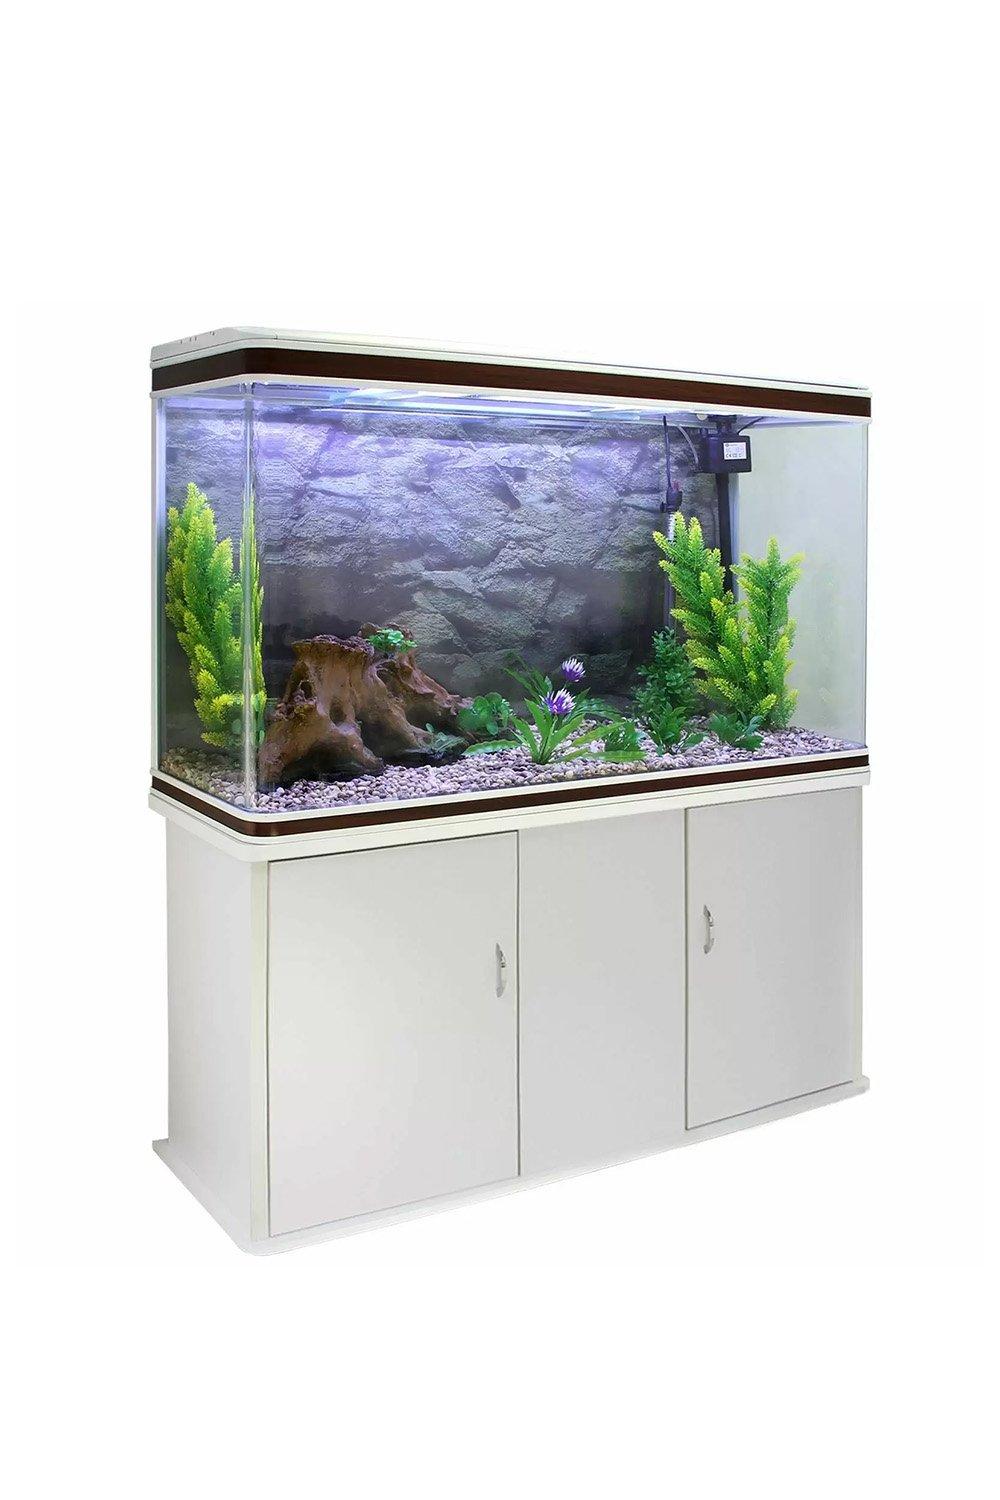 Aquarium Fish Tank & Cabinet with Complete Starter Kit - White Tank & Natural Gravel